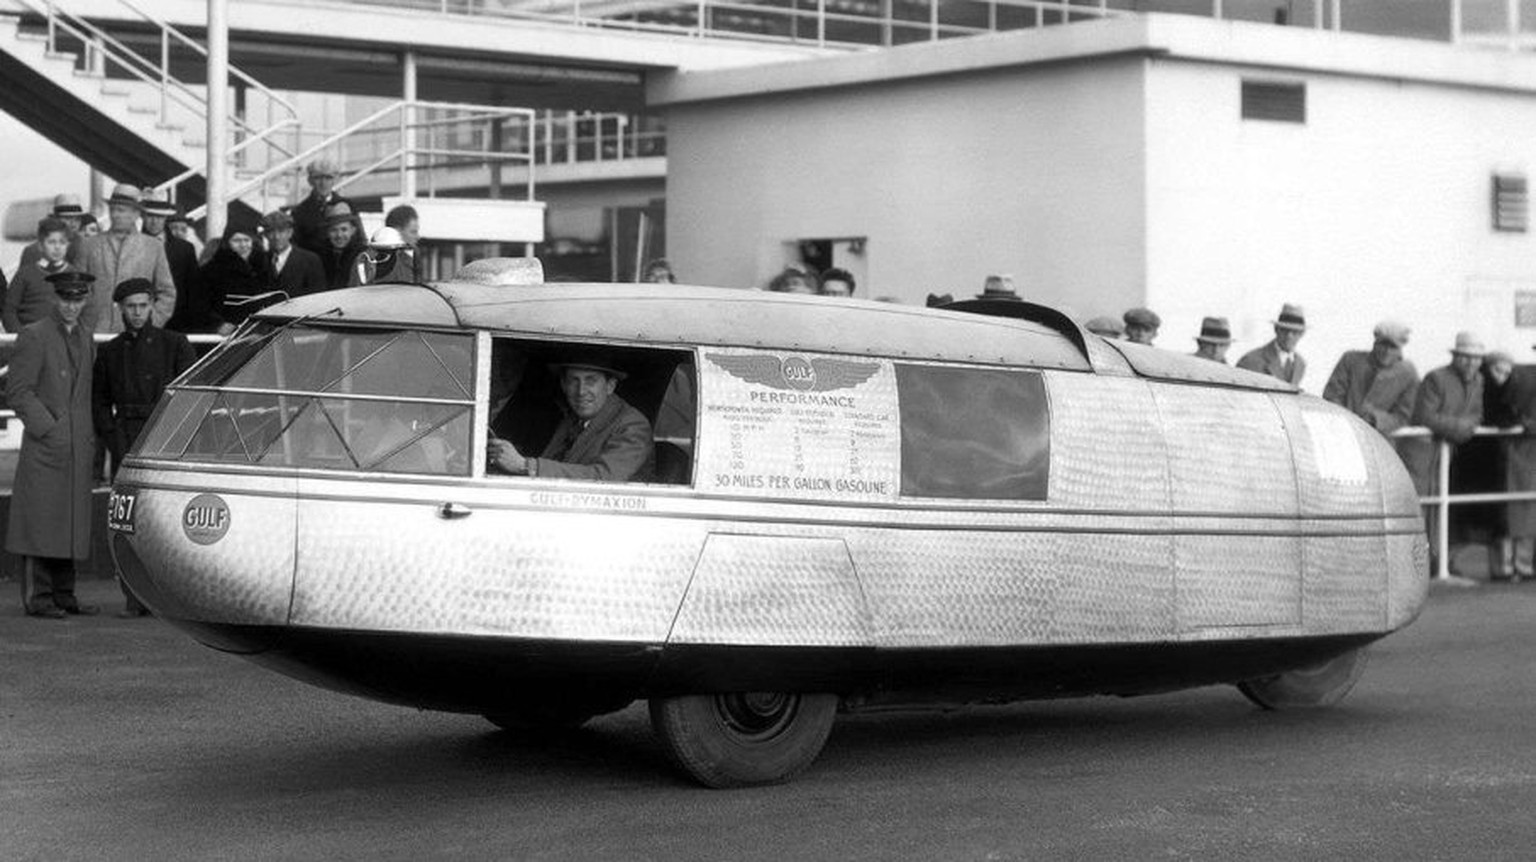 Buckminster Fuller's Dymaxion Car 1933 https://auto.howstuffworks.com/test-driving-buckminster-fullers-dymaxion-car.htm